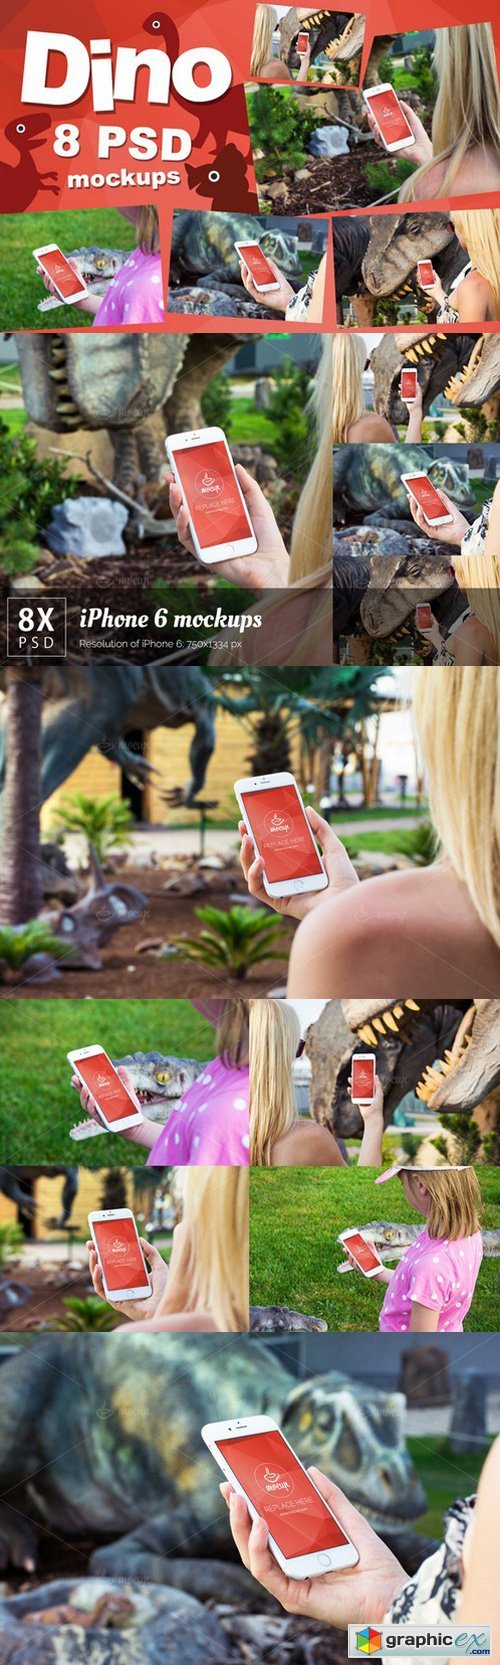 8 PSD iPhone 6 Mockups Dino